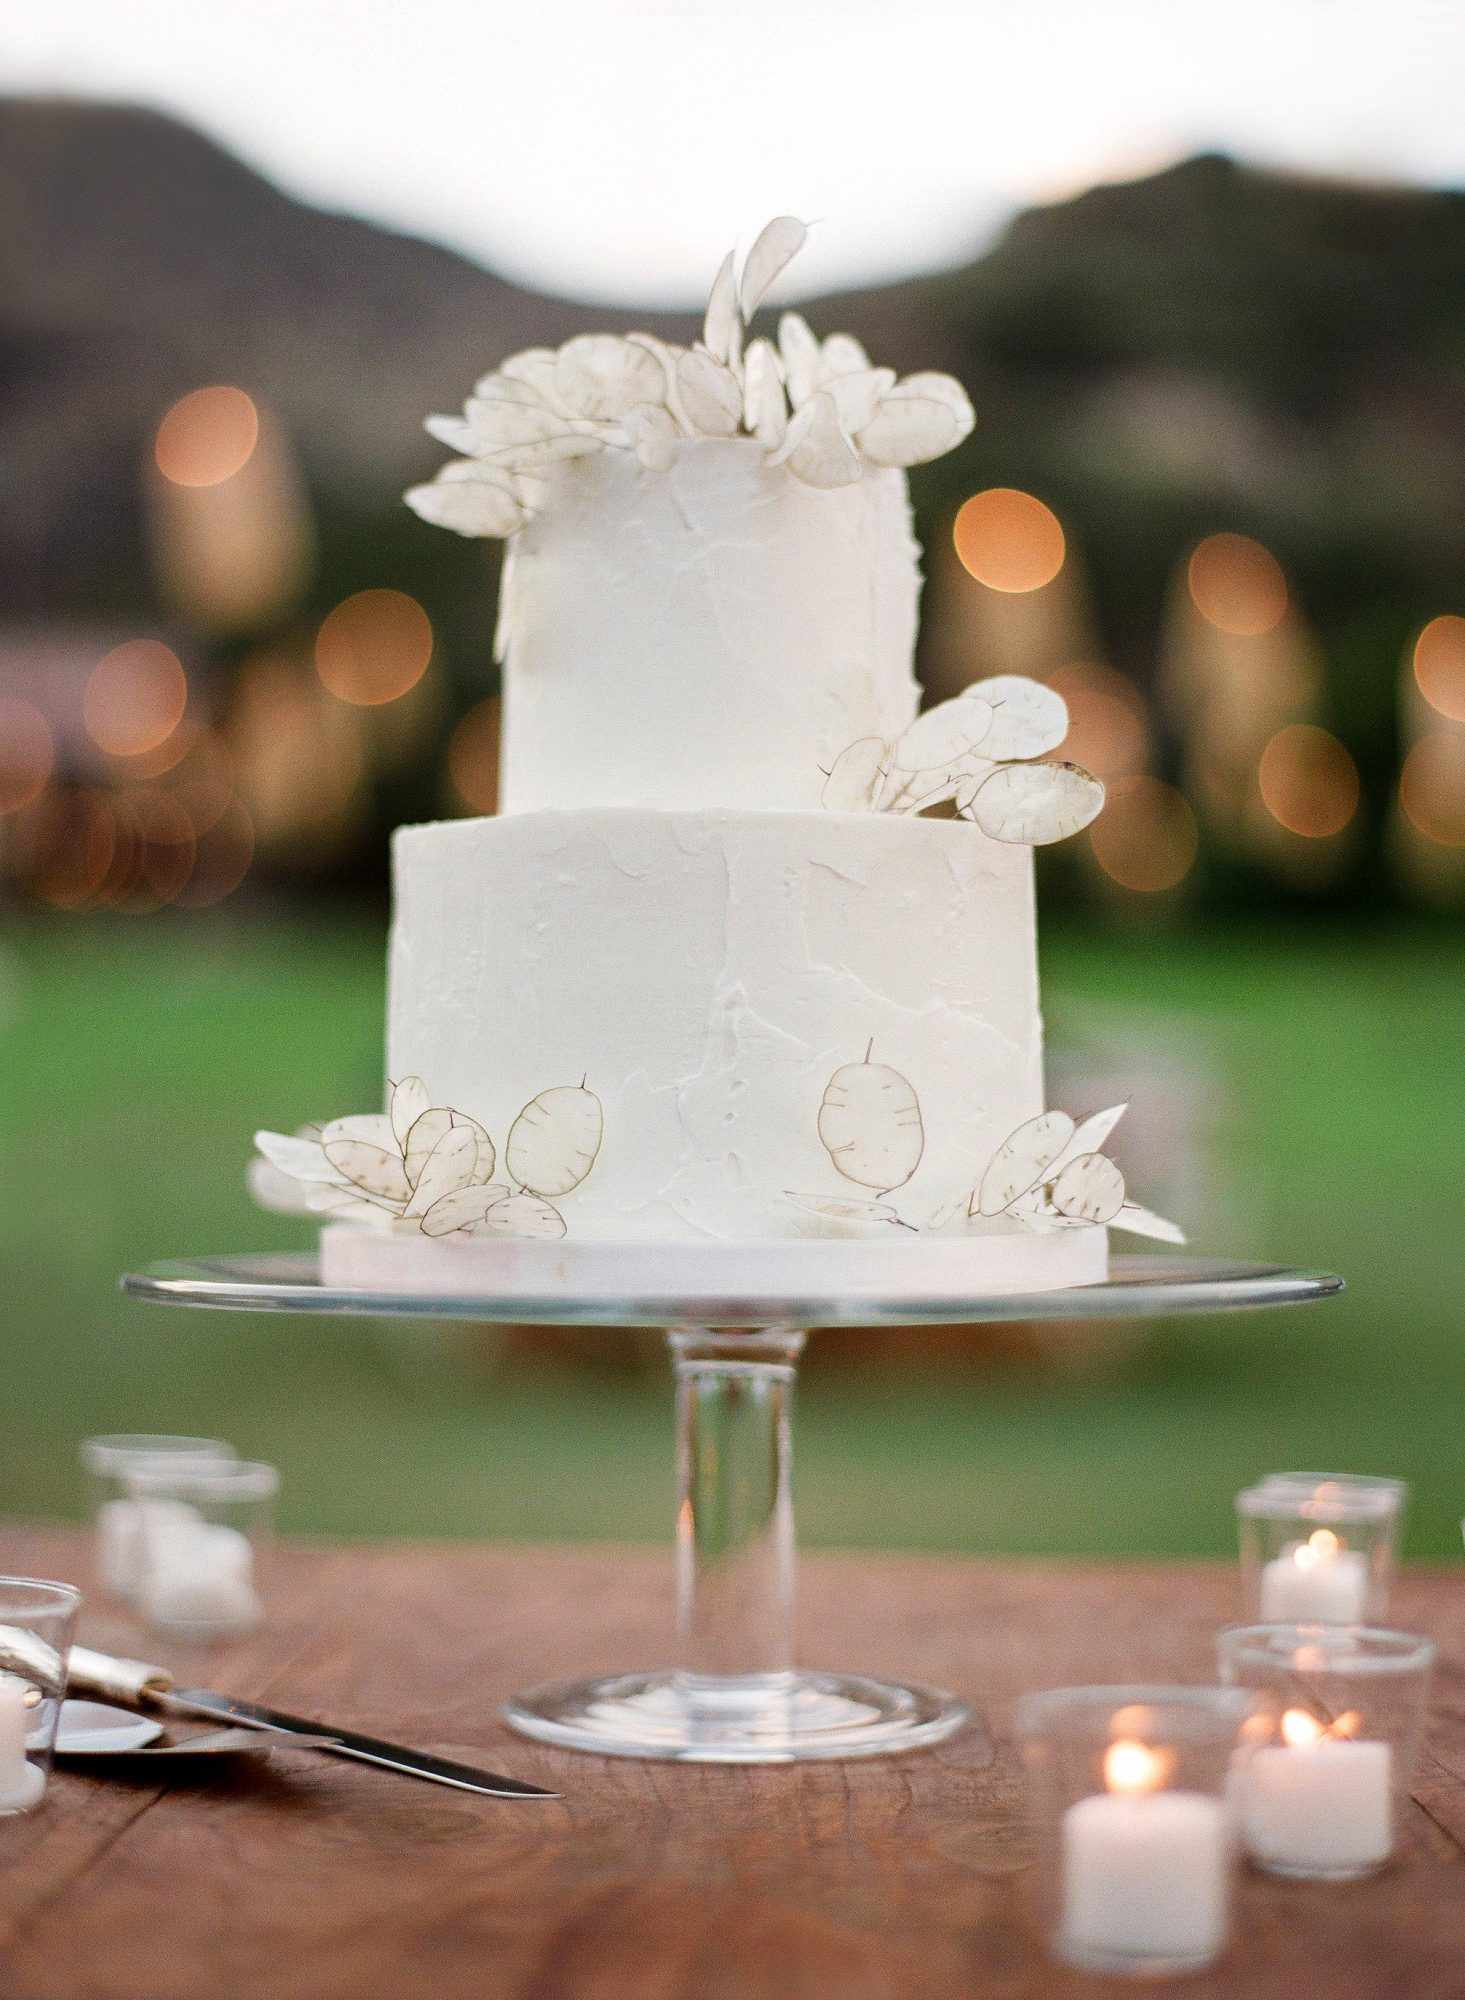 An All-White Wedding Cake